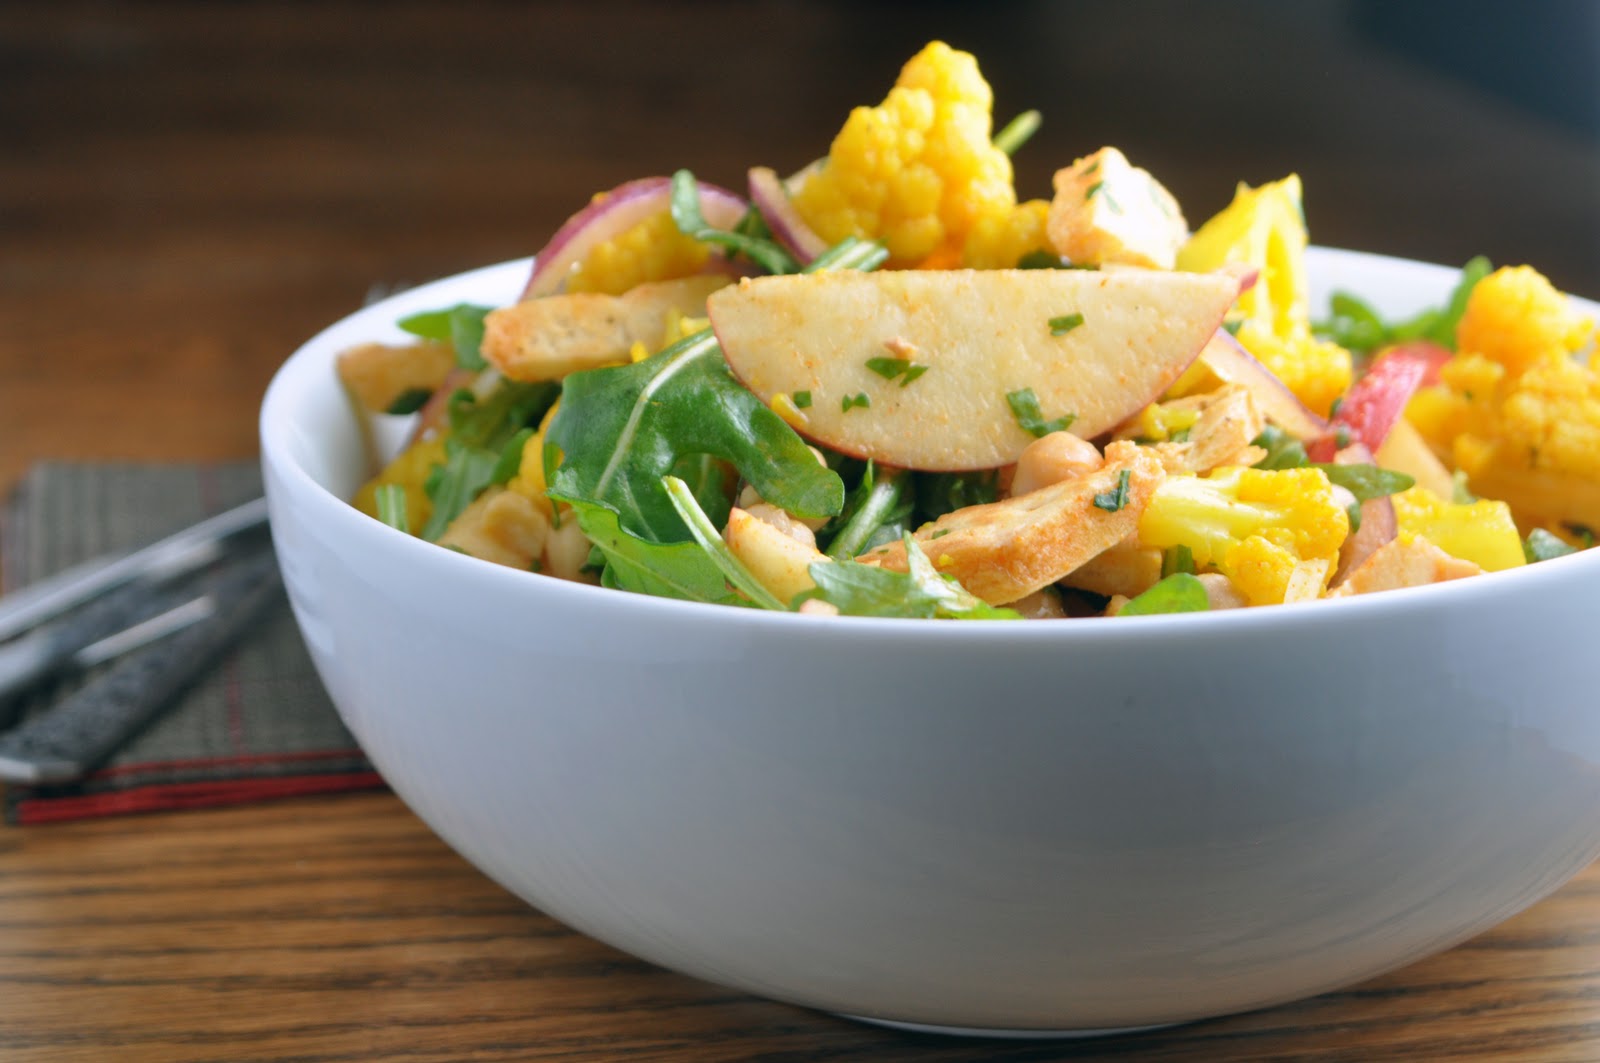 Impeccable Taste: Curried Cauliflower & Chickpea Salad